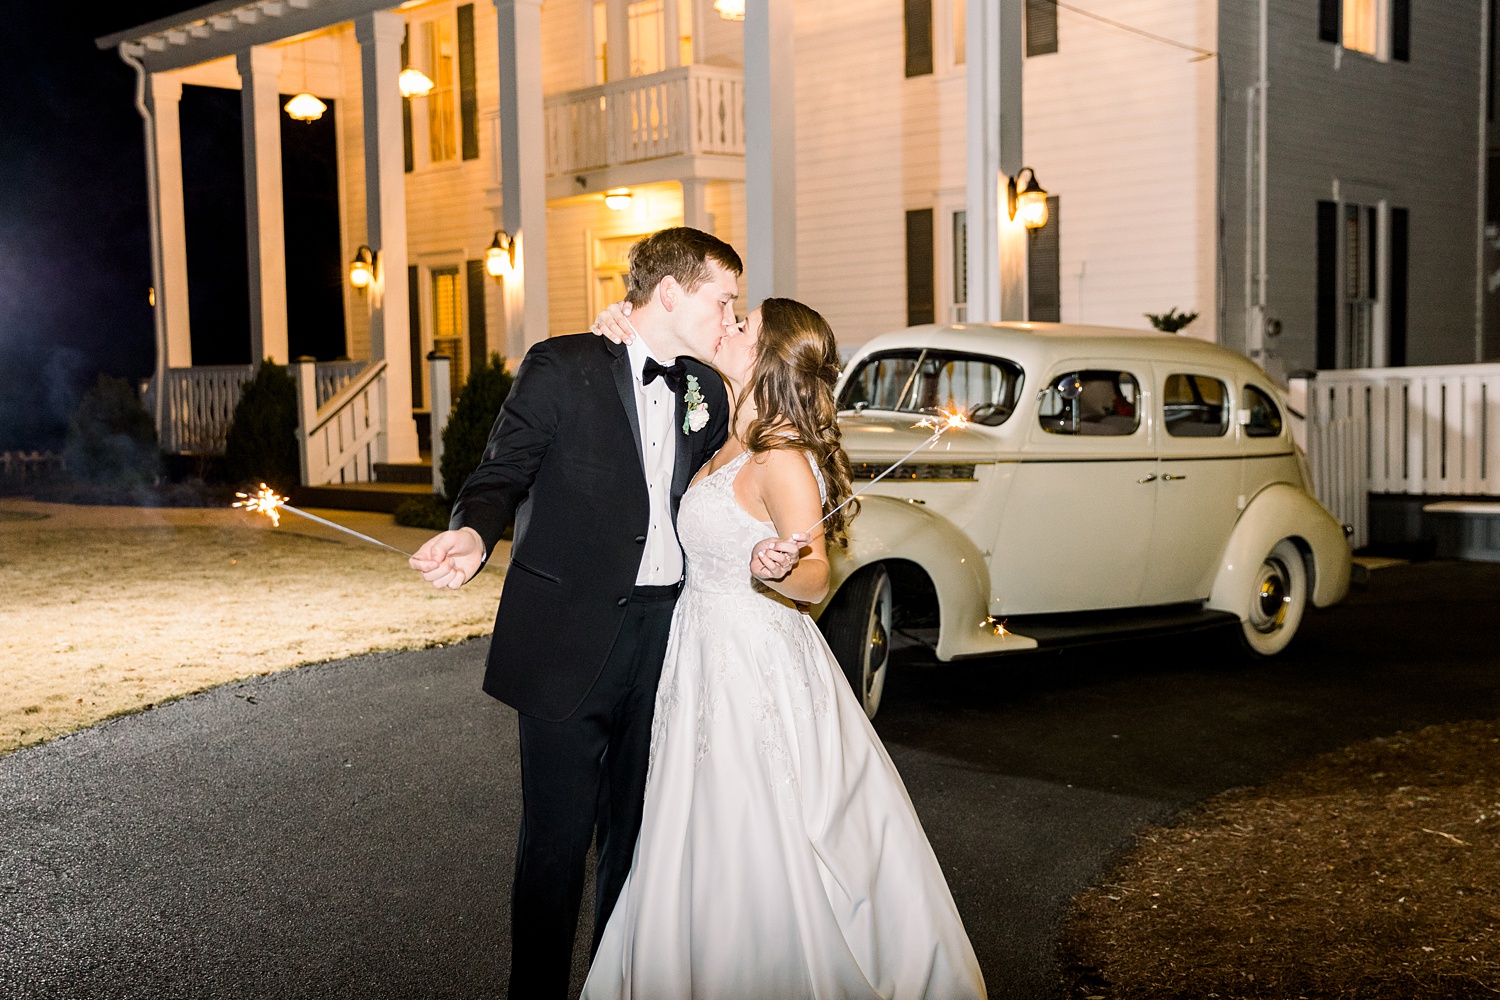 newlyweds pose by classic car during Alabama wedding reception